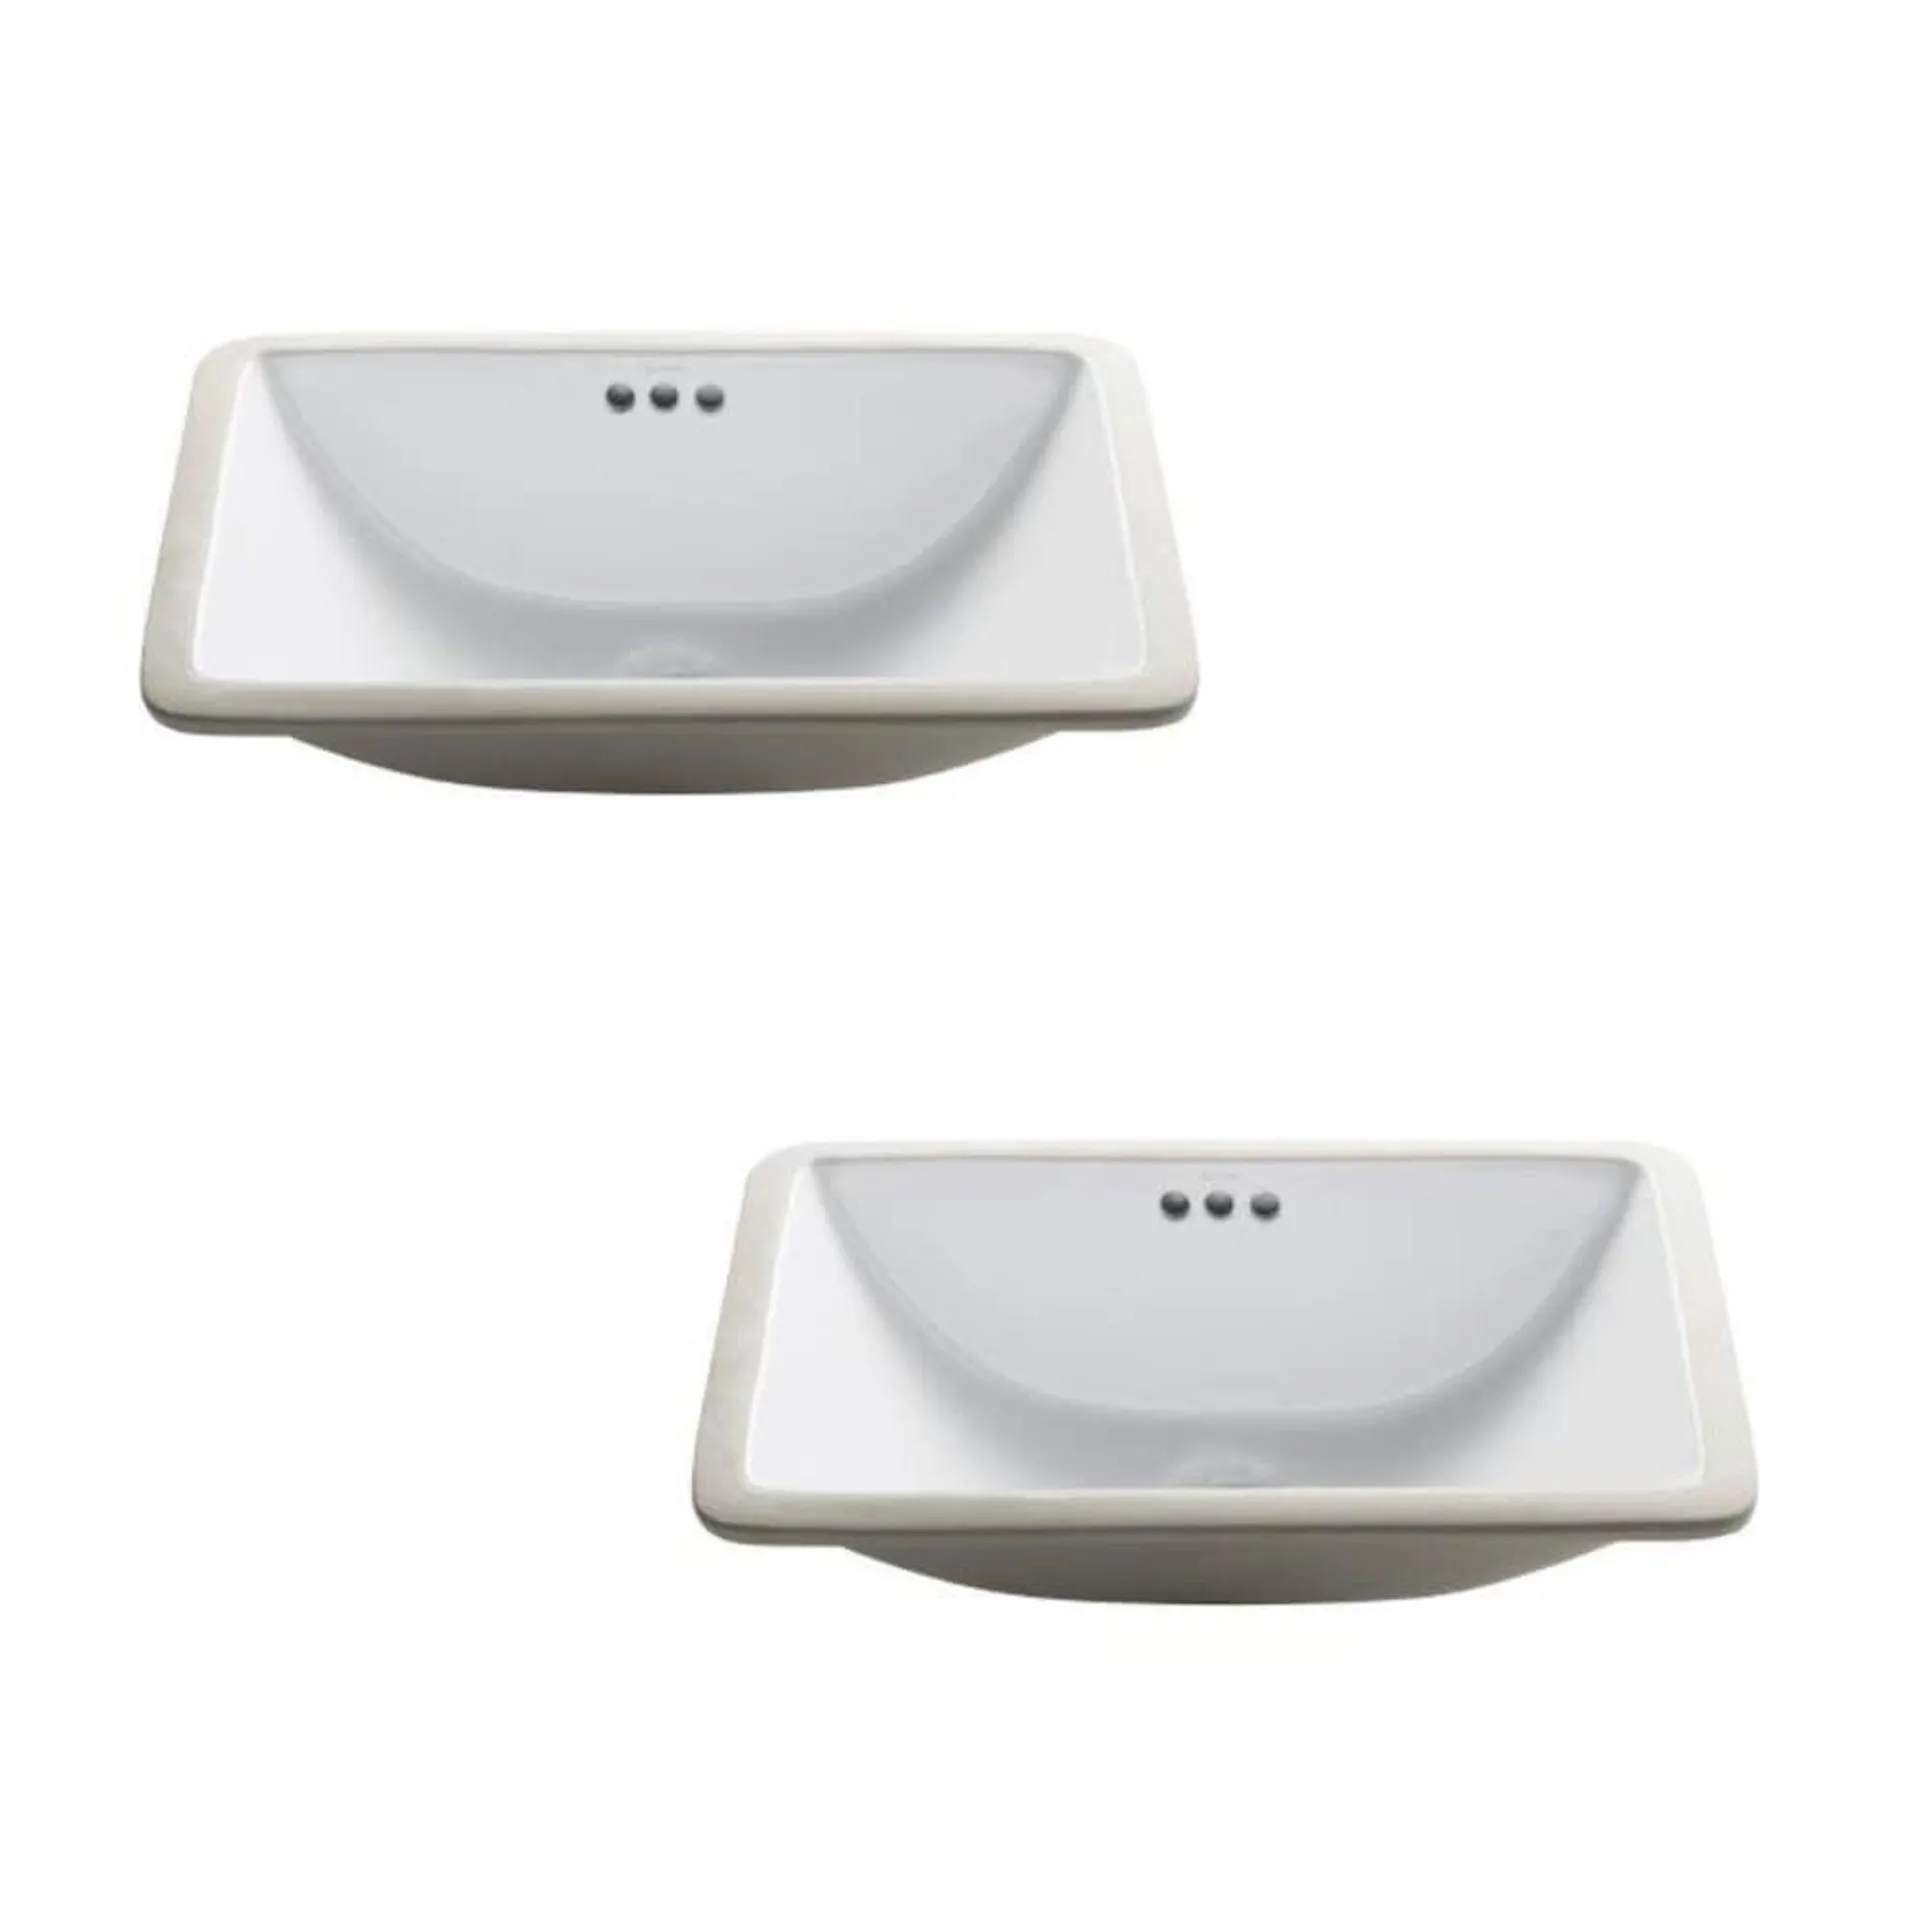 21-inch Rectangular Undermount White Bathroom Sink with Overflow (2-Pack)